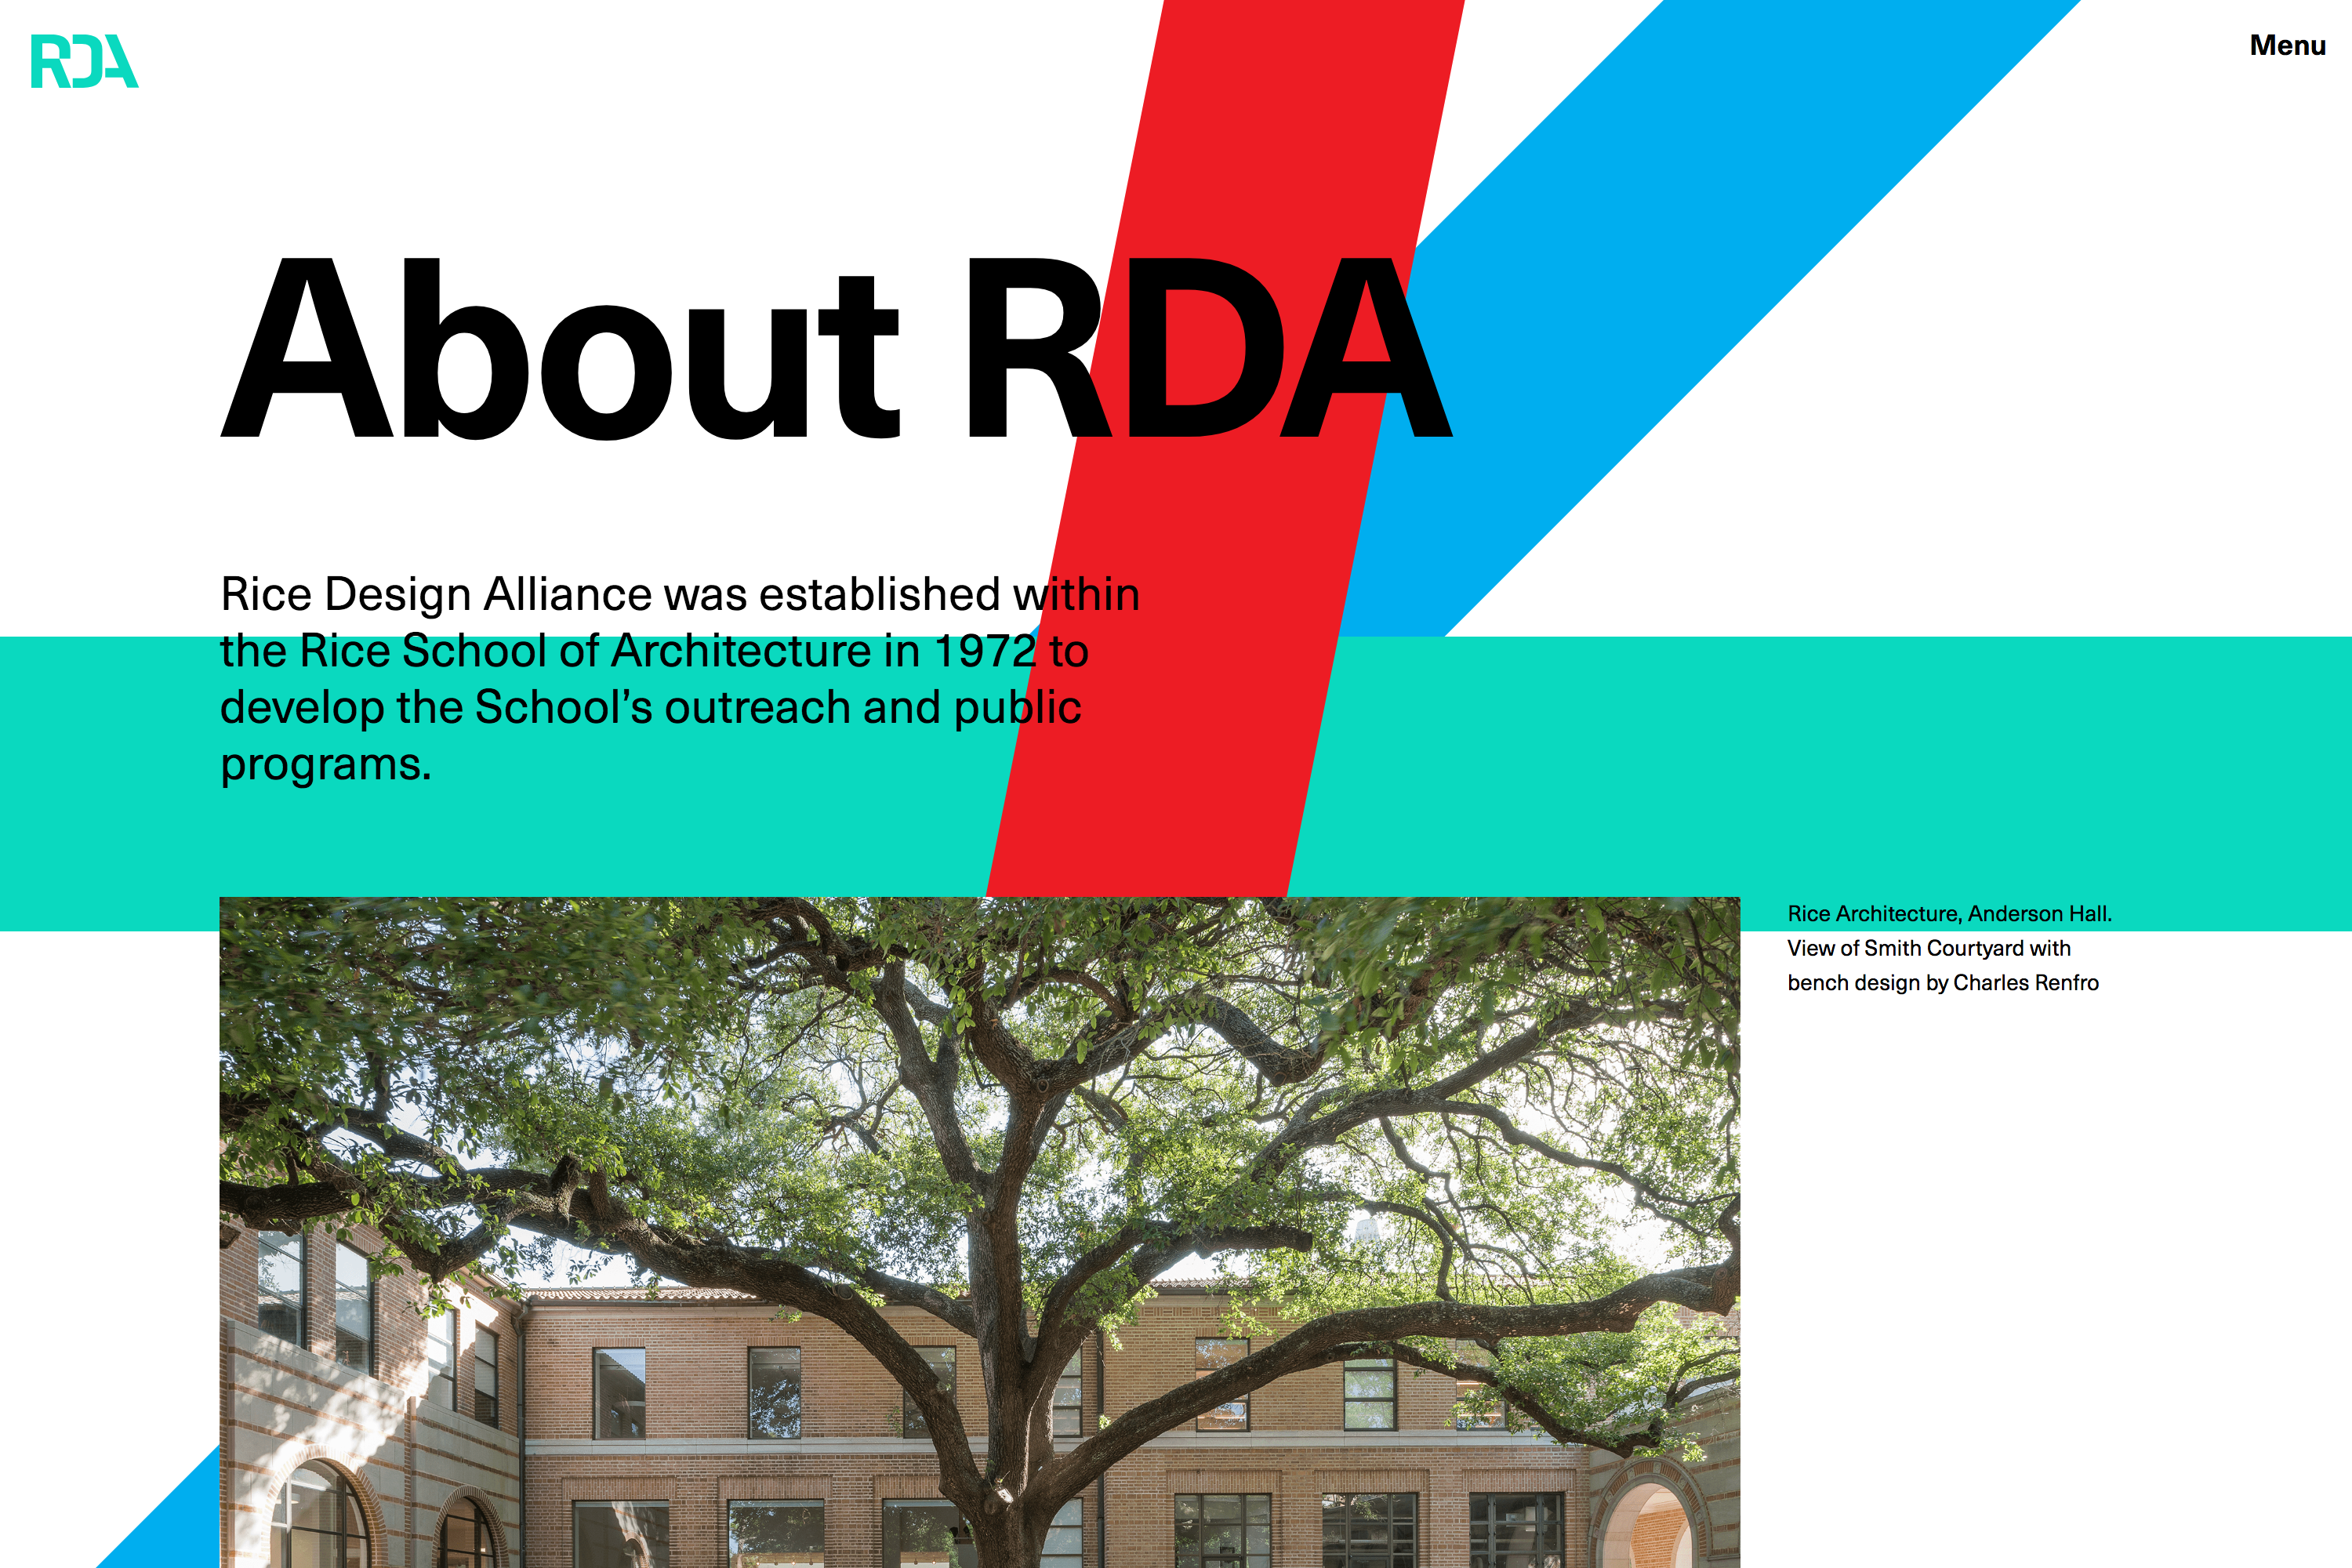 About RDA, Rice Design Alliance website, Talia Cotton and The Original Champions of Design